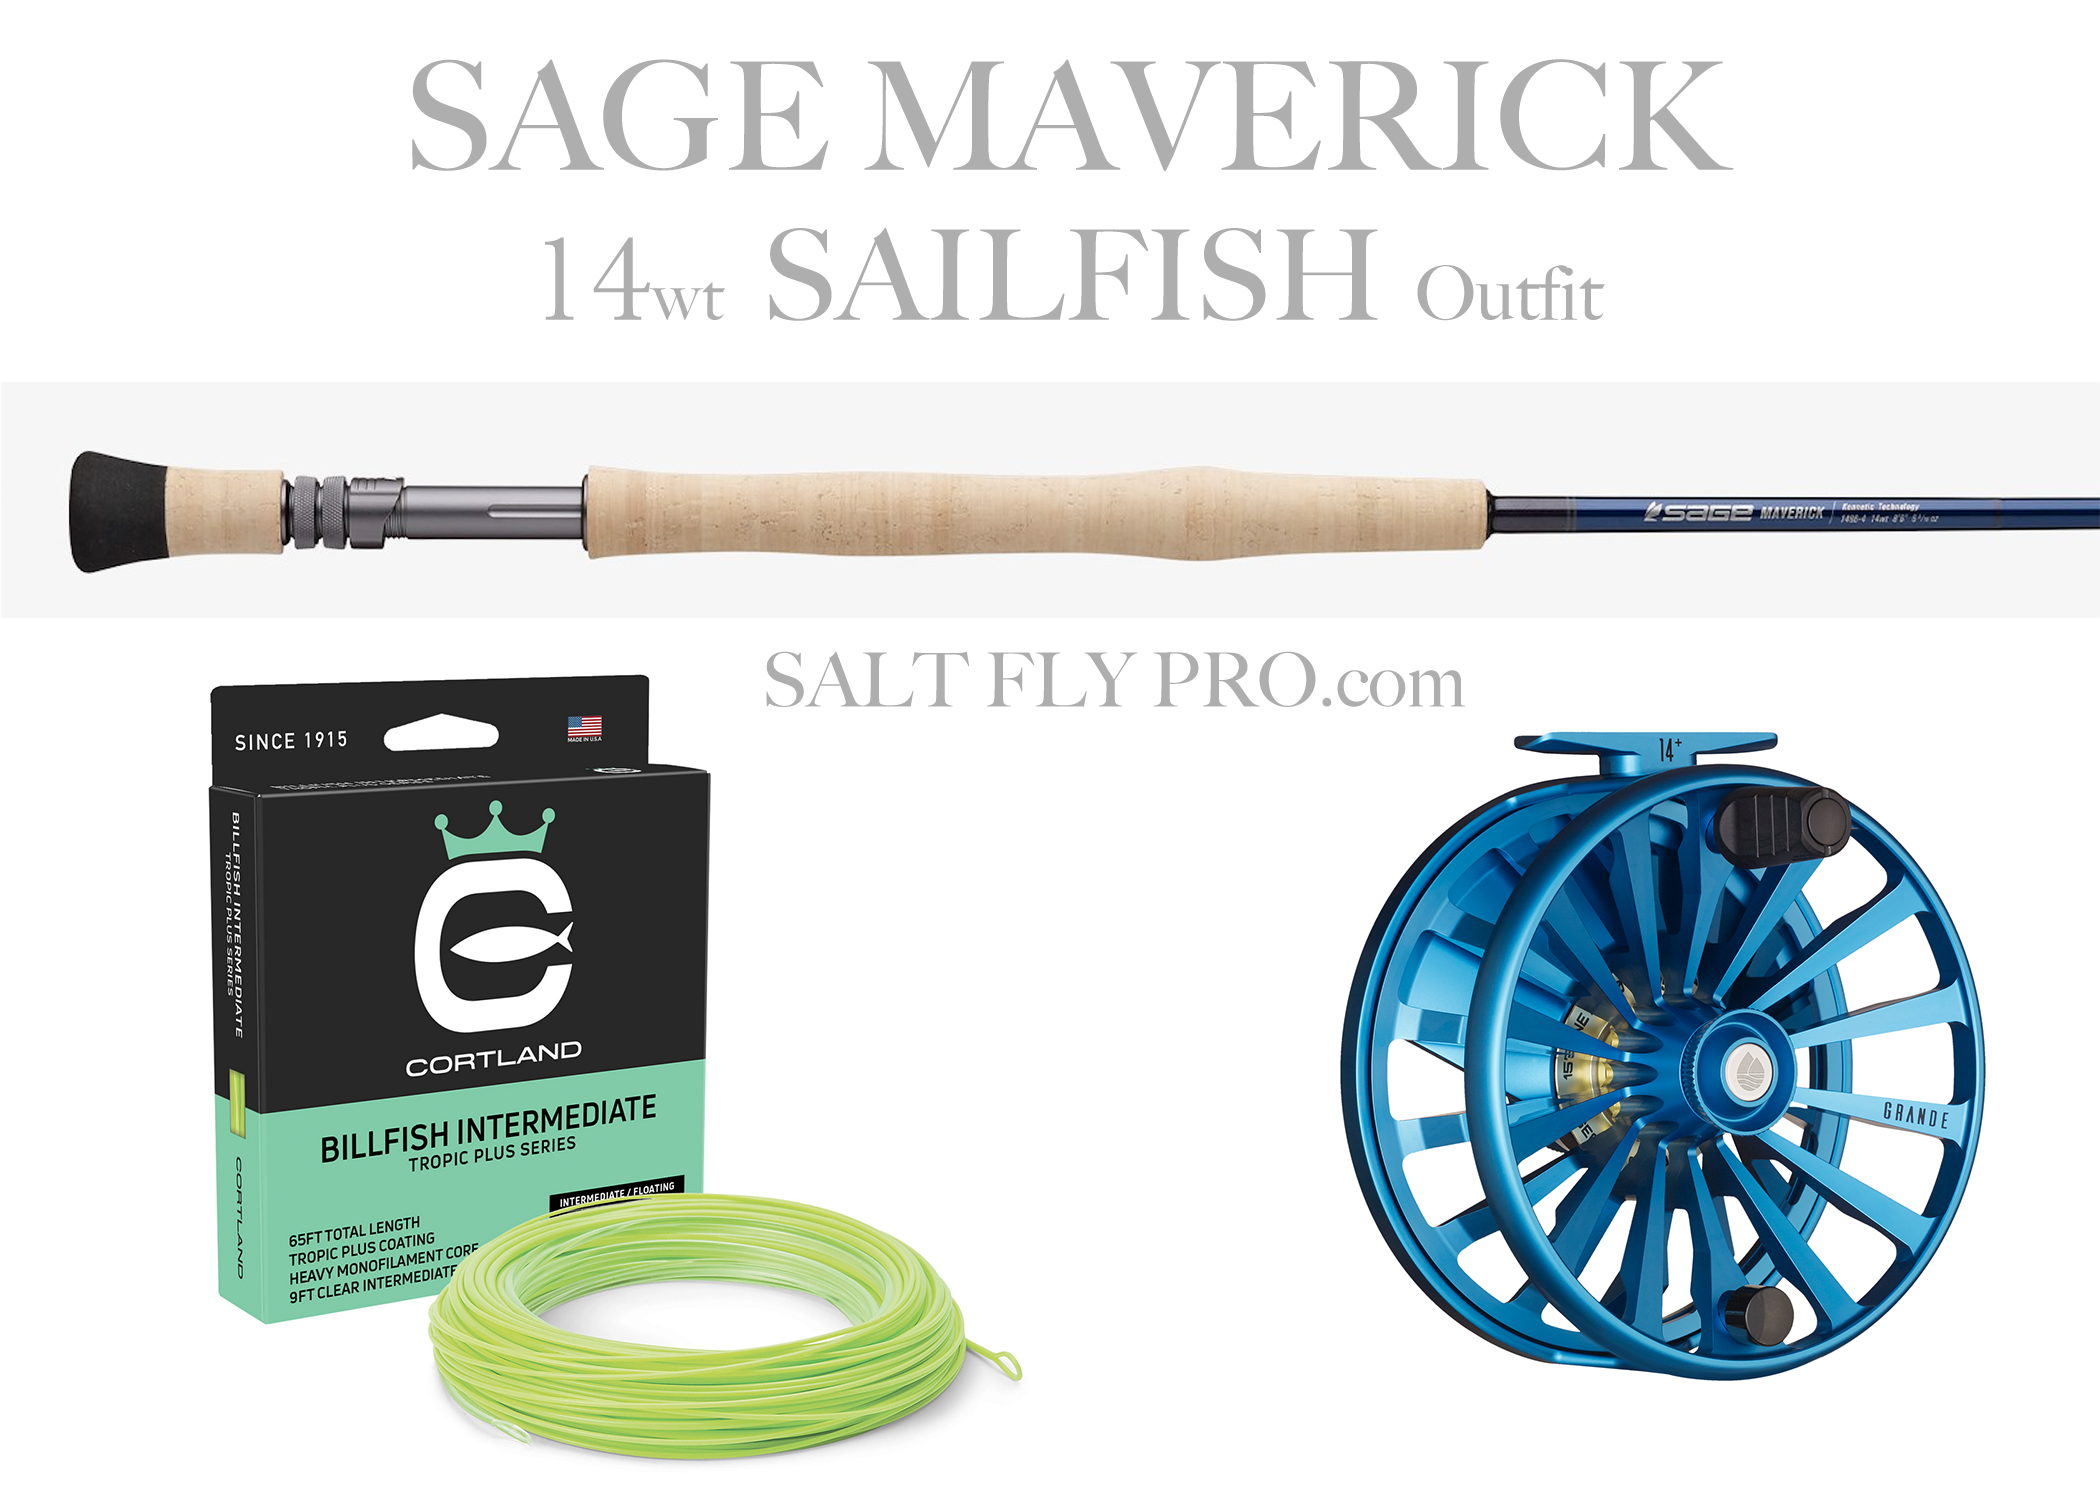 Sage MAVERICK 14wt SAILFISH Fly Rod Outfit - NEW!